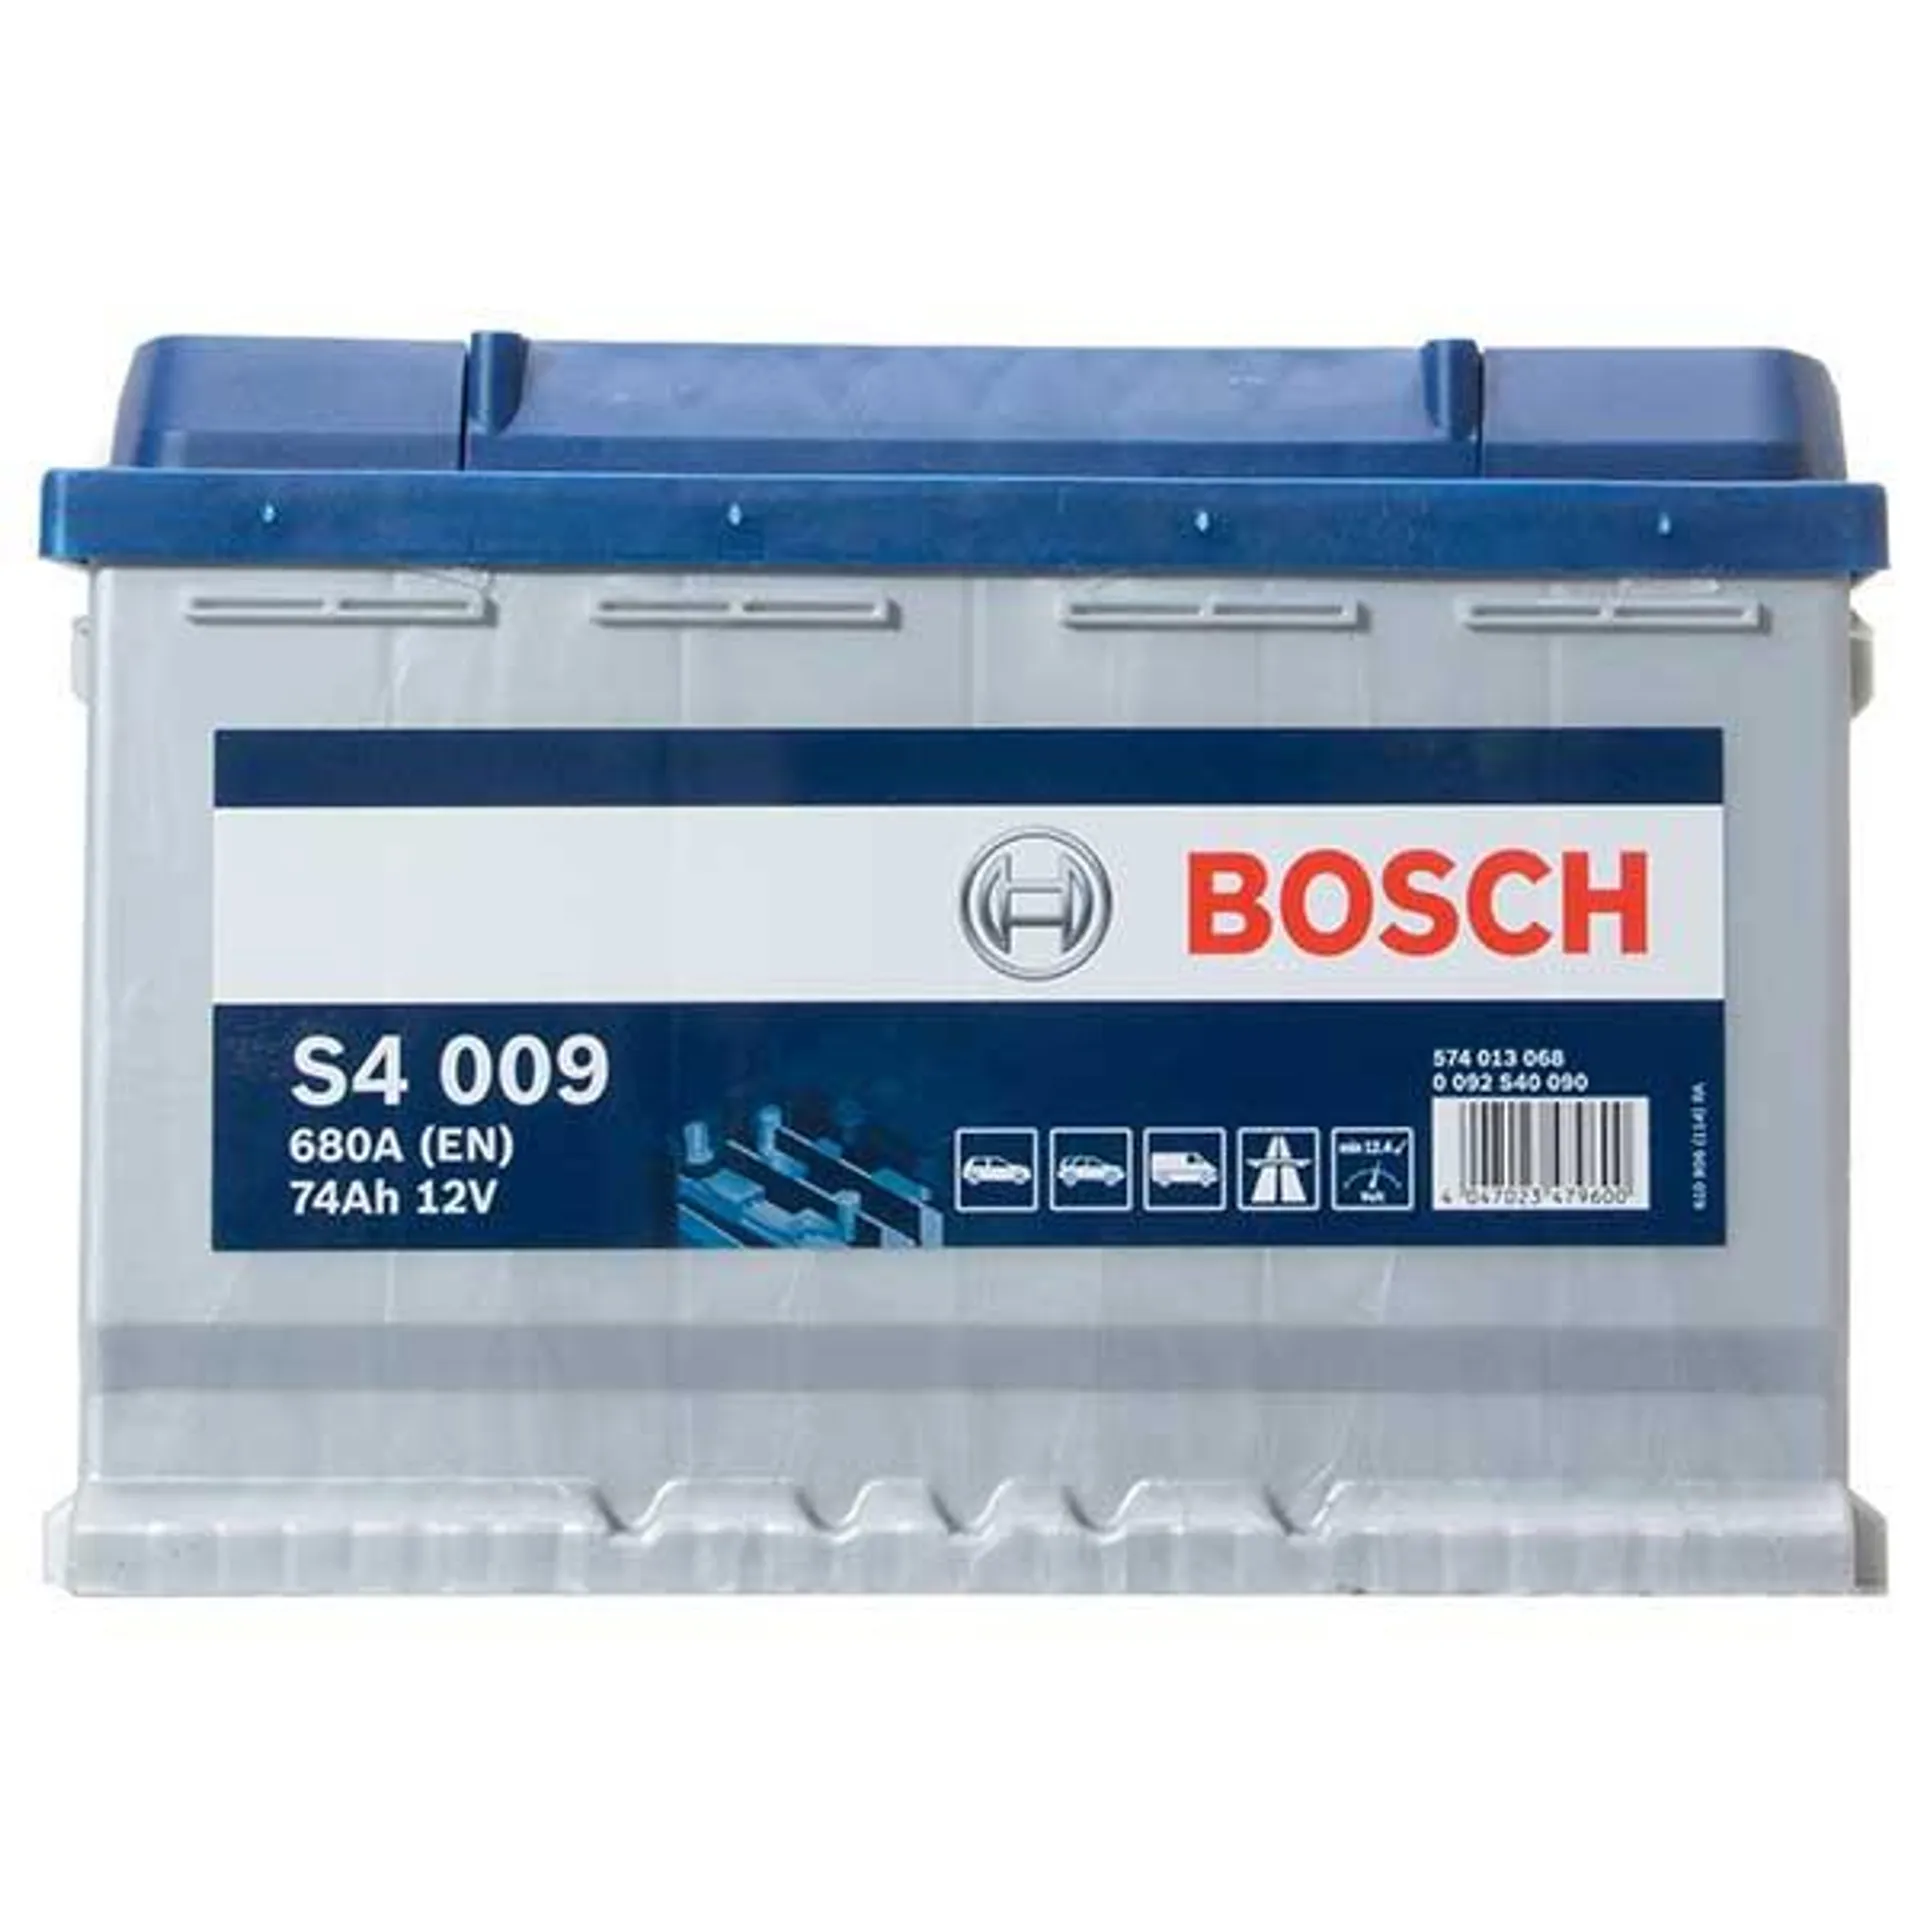 Bosch S4 Car Battery 086 4 Year Guarantee